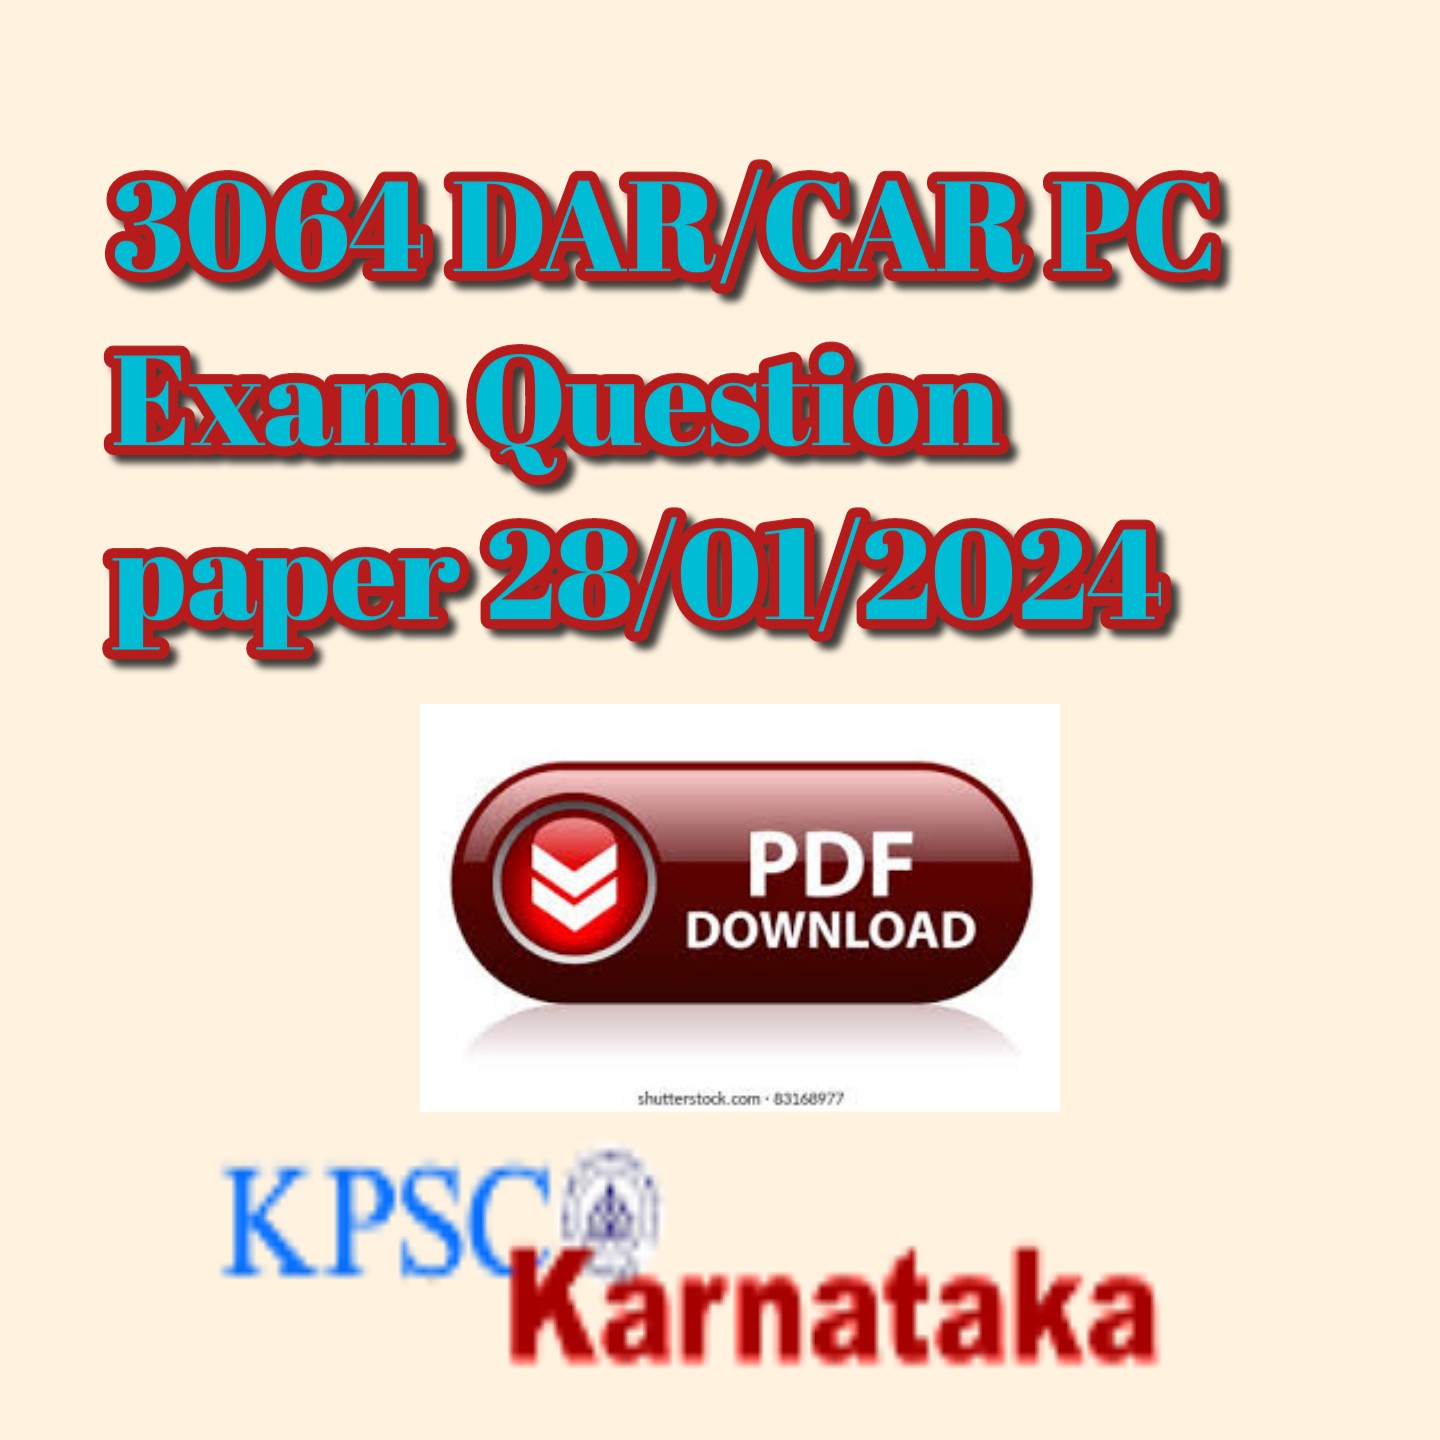 3064 DAR/CAR PC Exam Question paper 28/01/2024